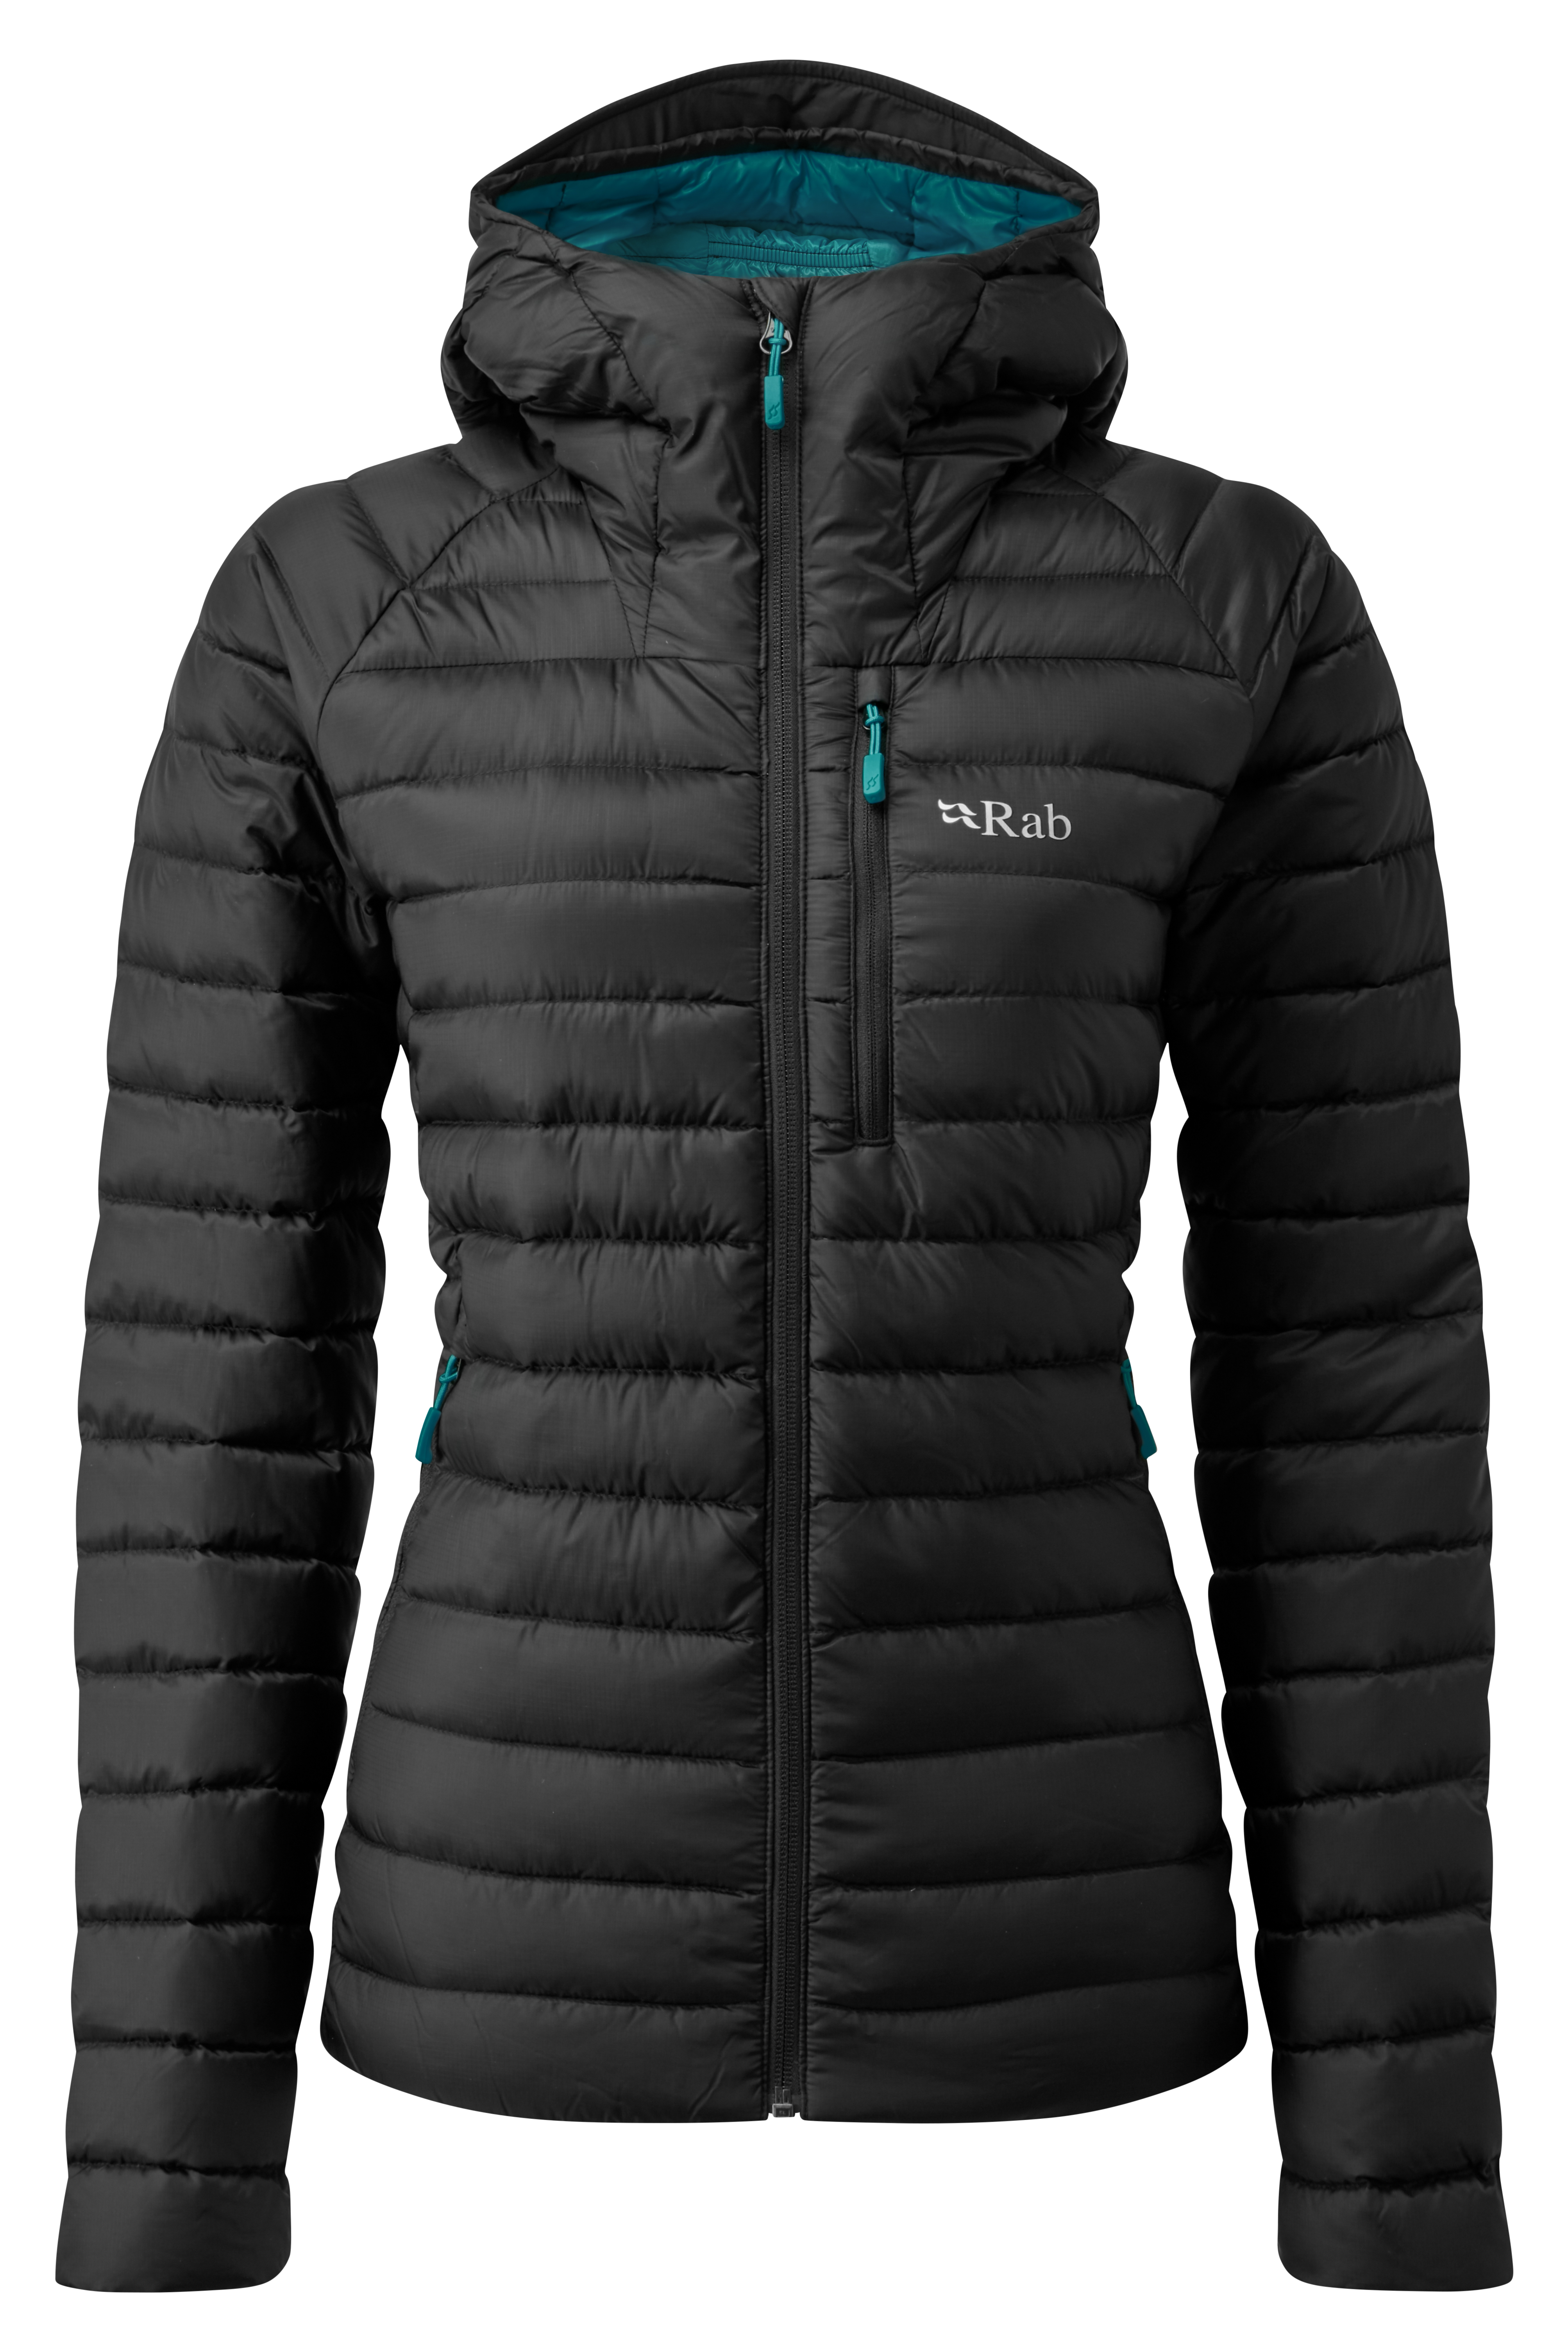 Women's RAB Microlight Alpine (Black) Jacket